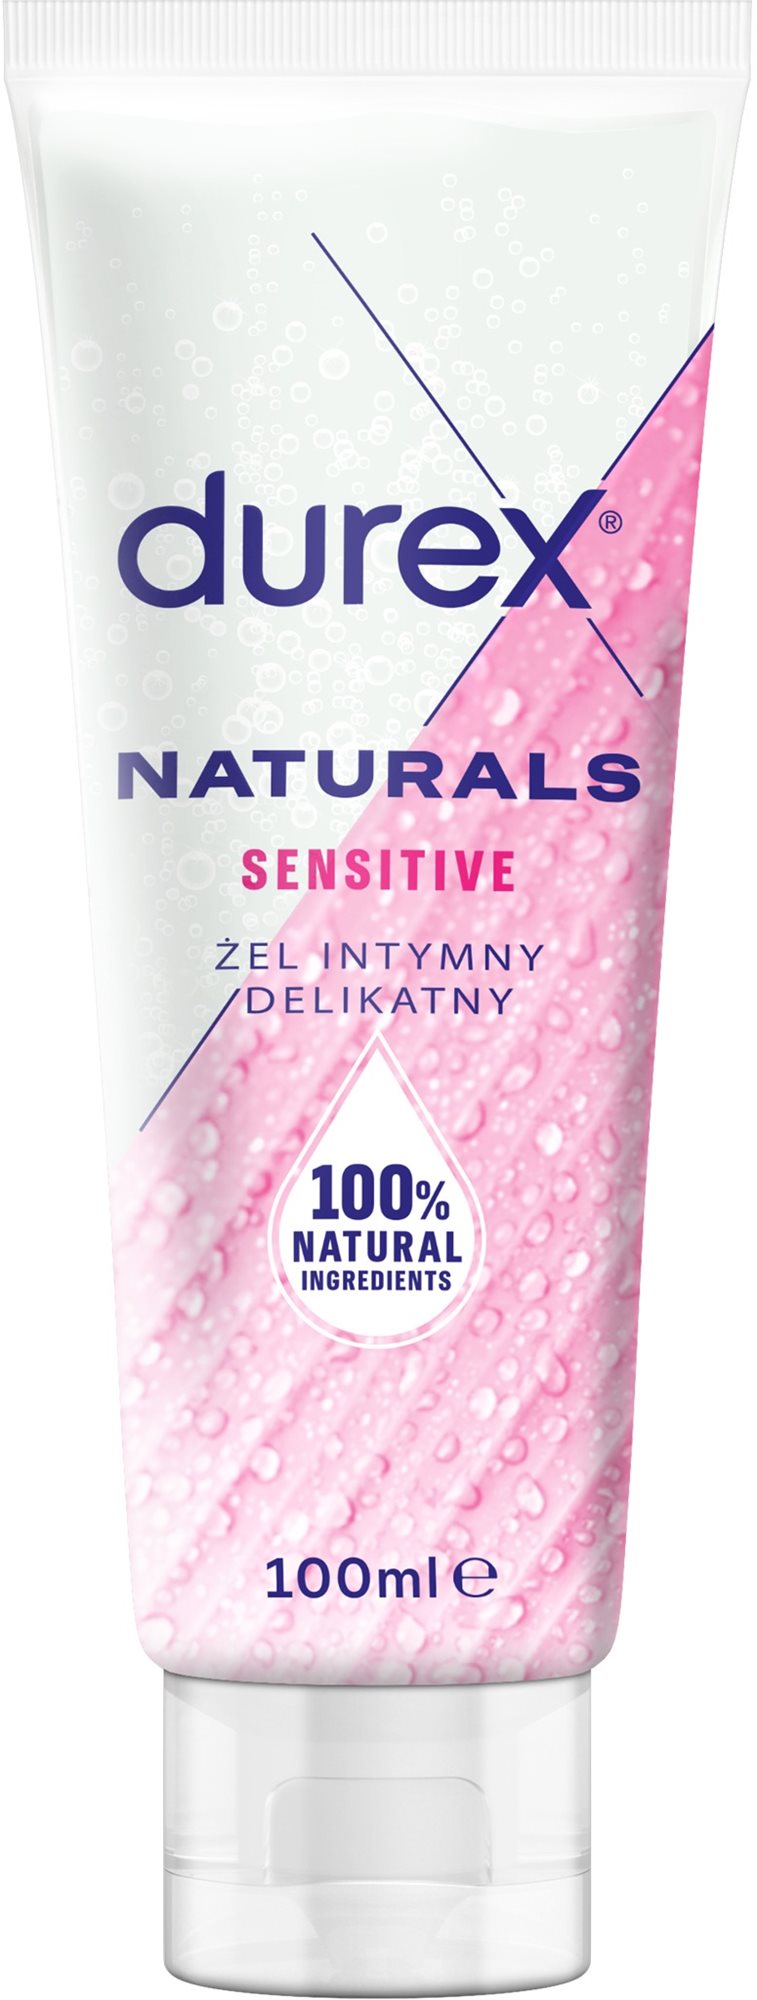 DUREX Naturals Sensitive 100 ml